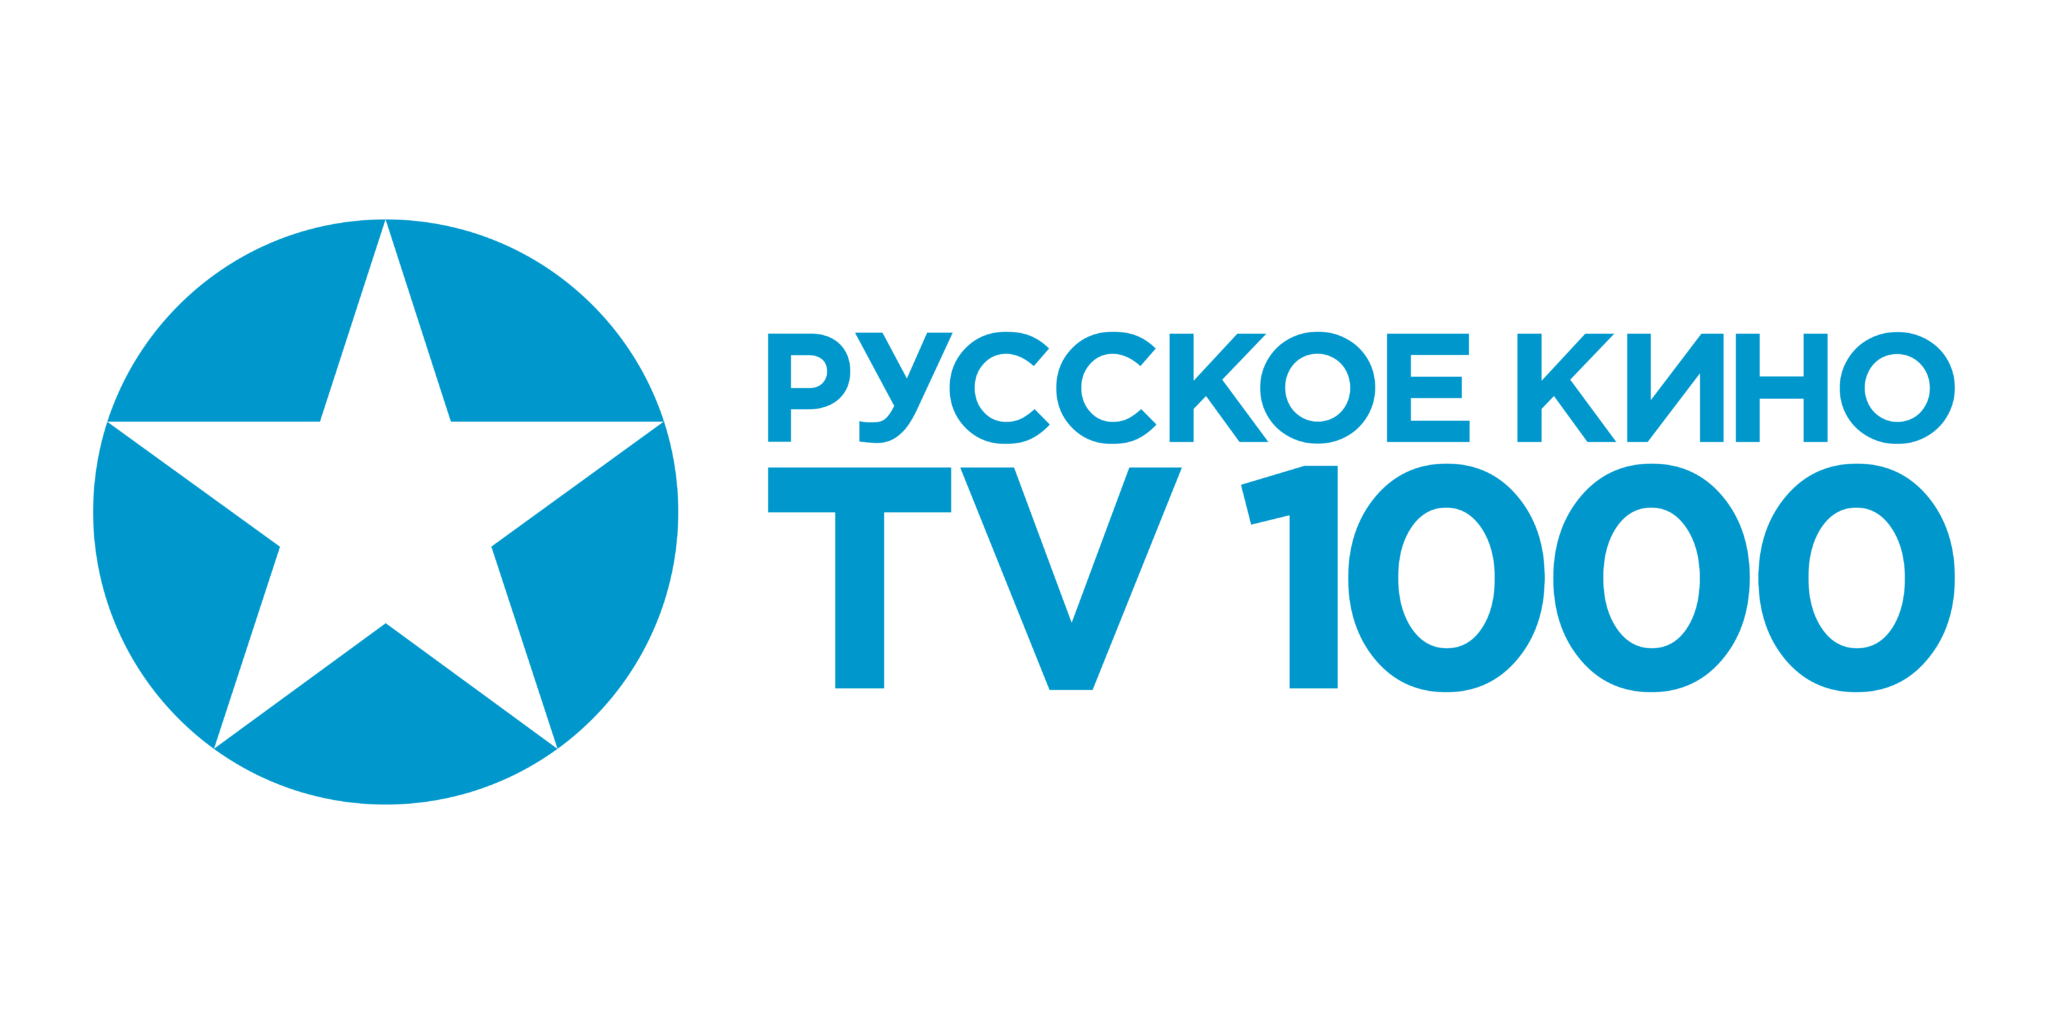 Канал тв 1000 новелла программа. Логотип телеканала TV 1000.